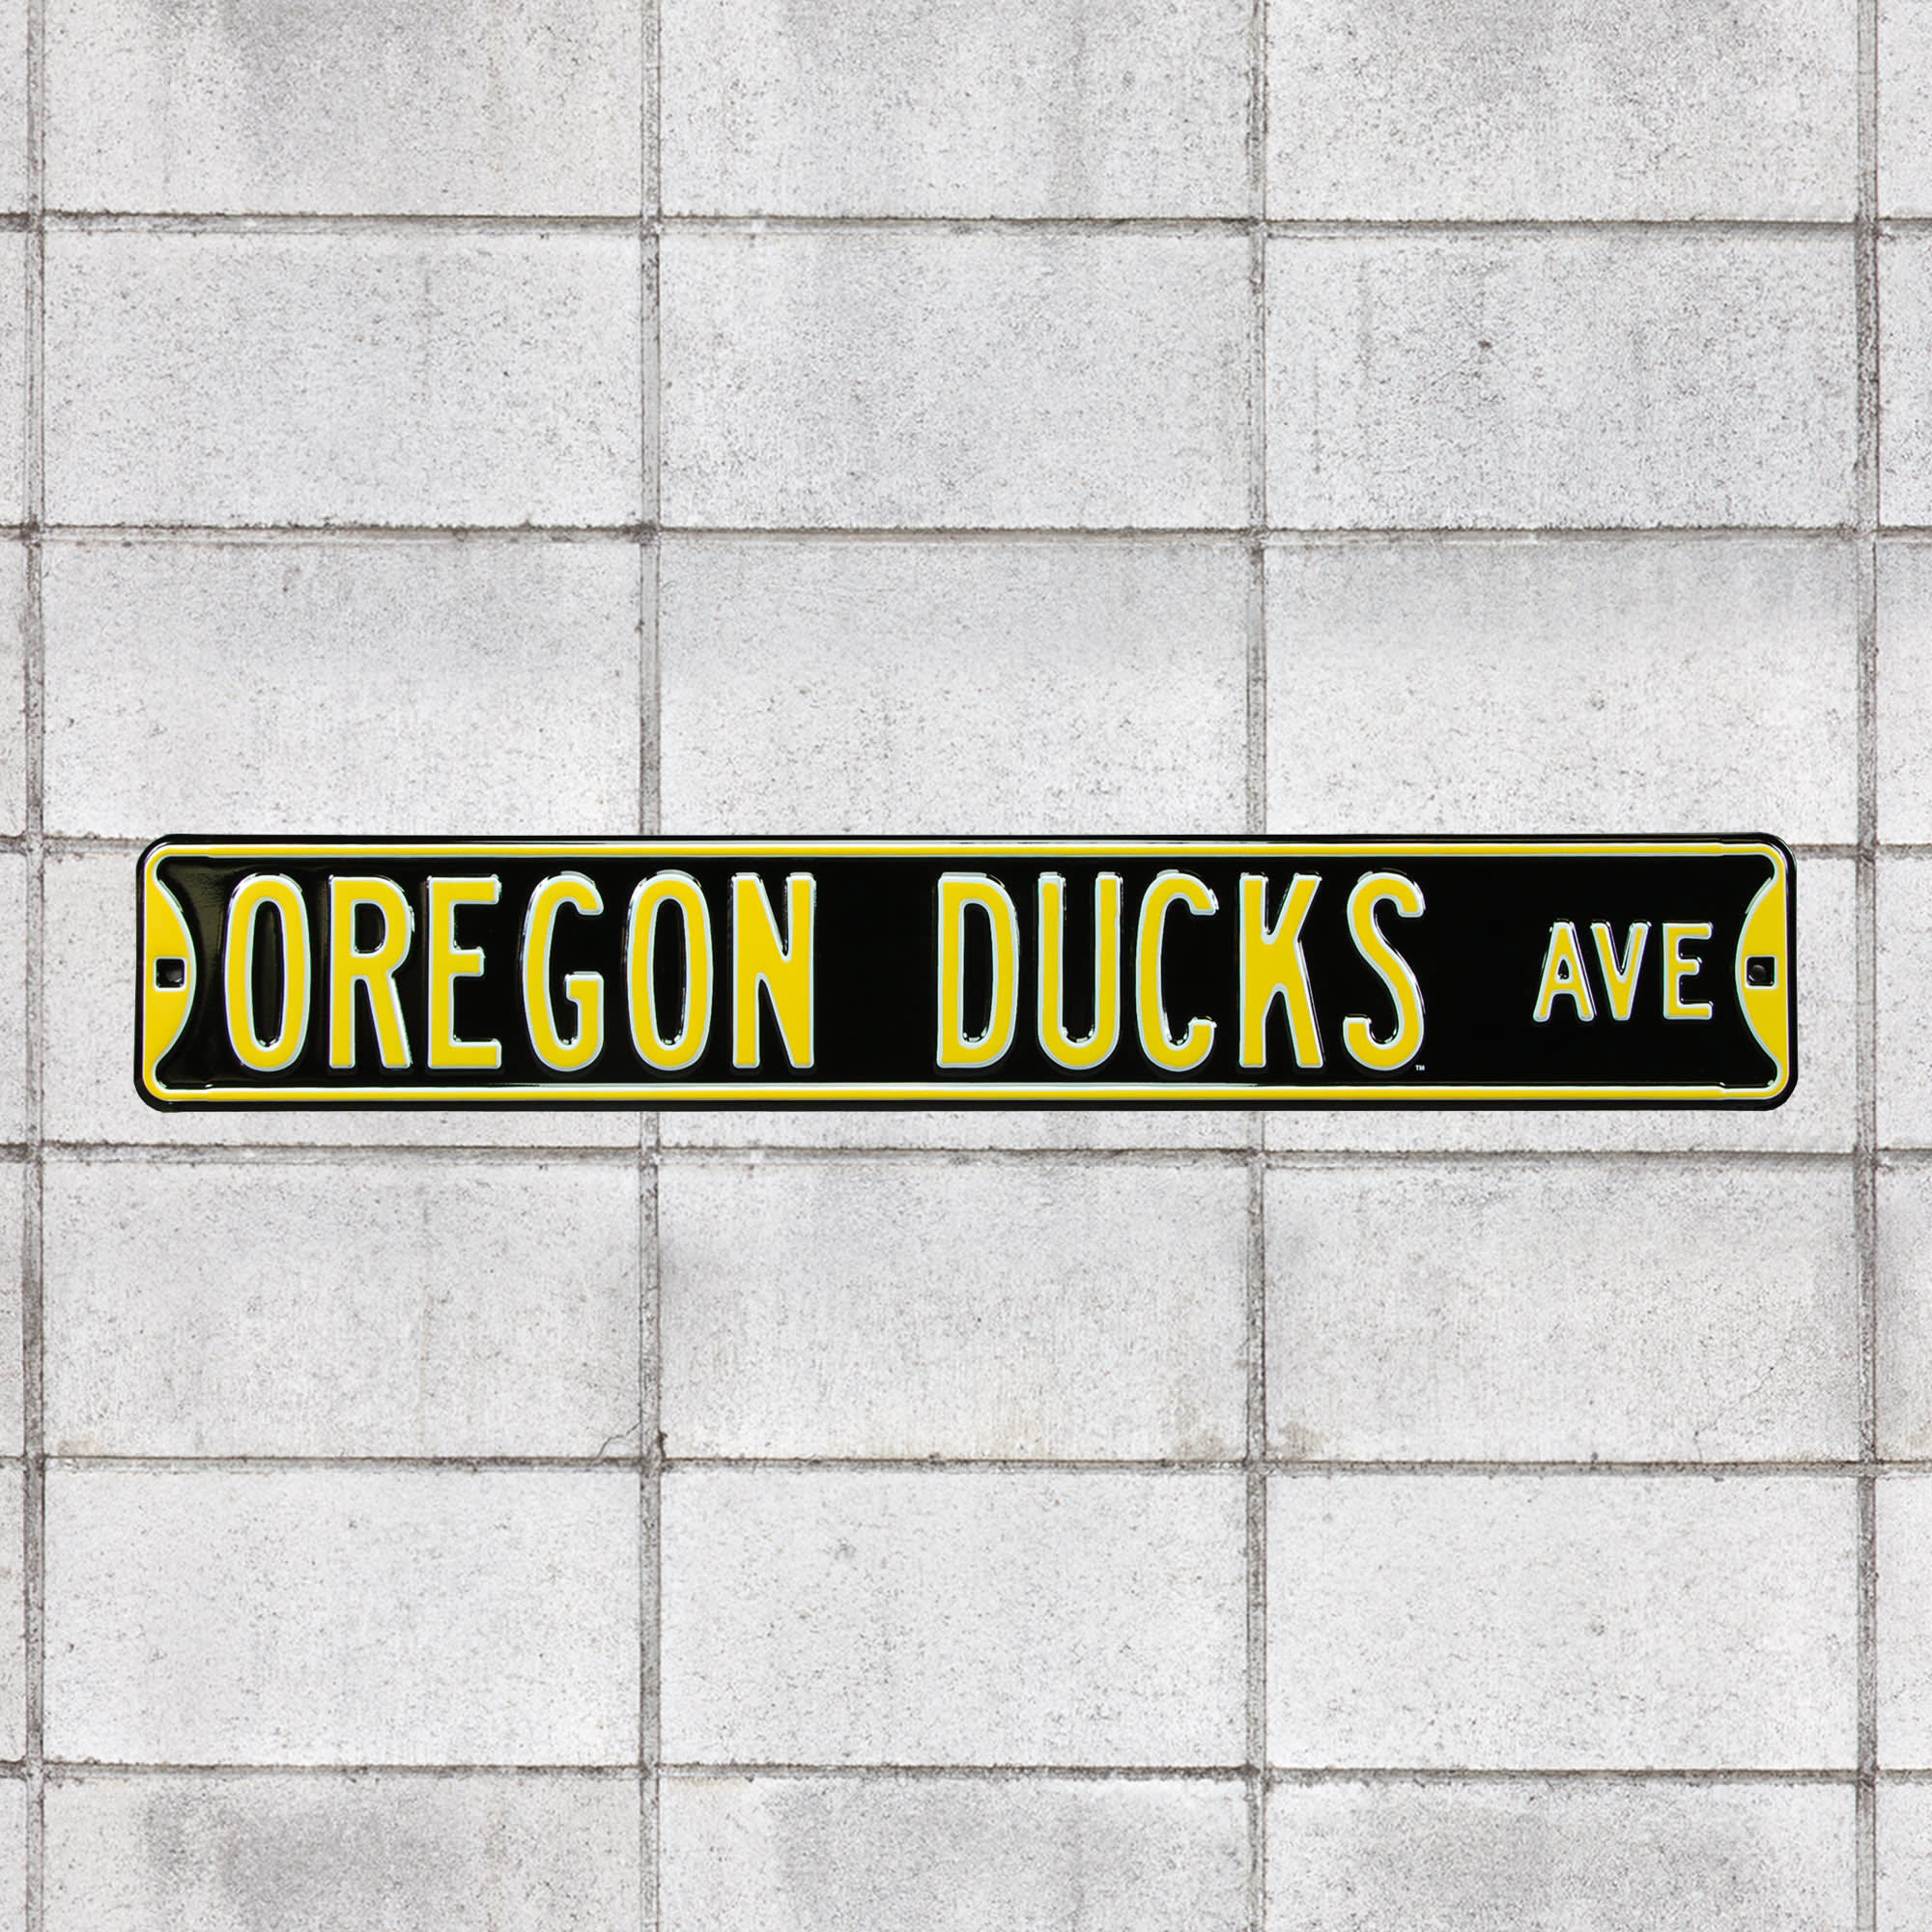 Oregon Ducks: Oregon Ducks Avenue - Officially Licensed Metal Street Sign 36.0"W x 6.0"H by Fathead | 100% Steel